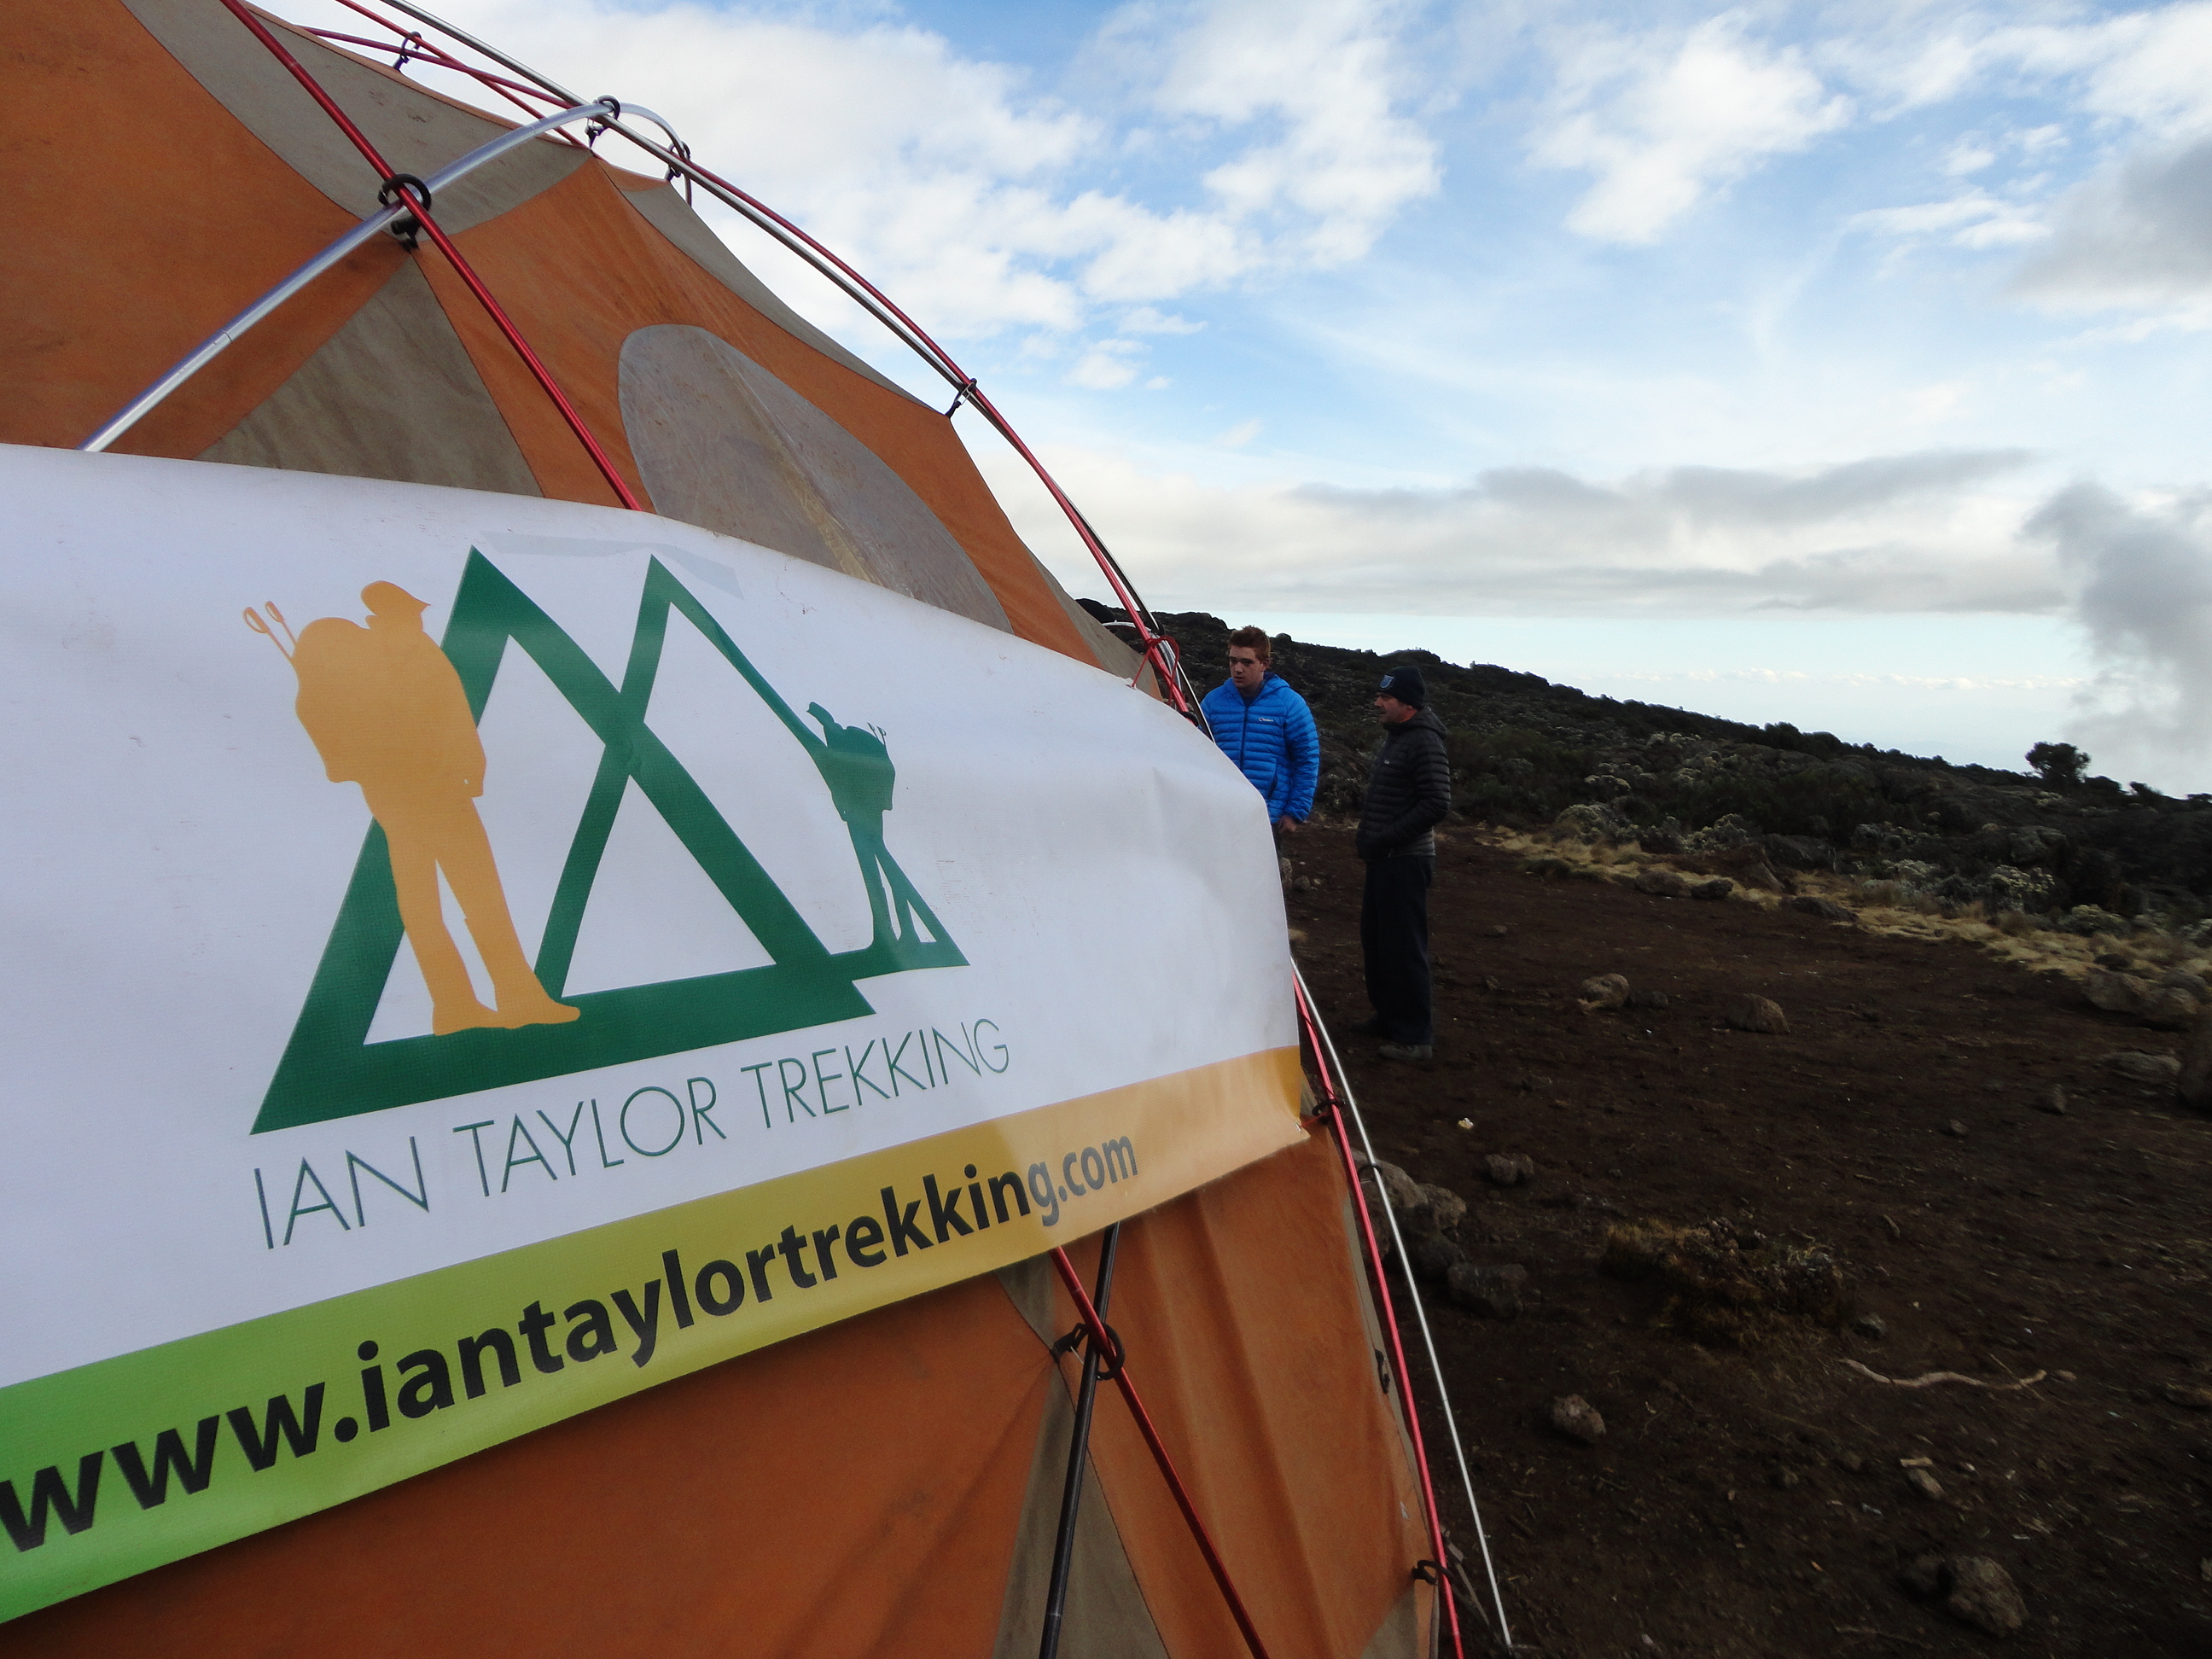 Ian Taylor Trekking Dome Tent